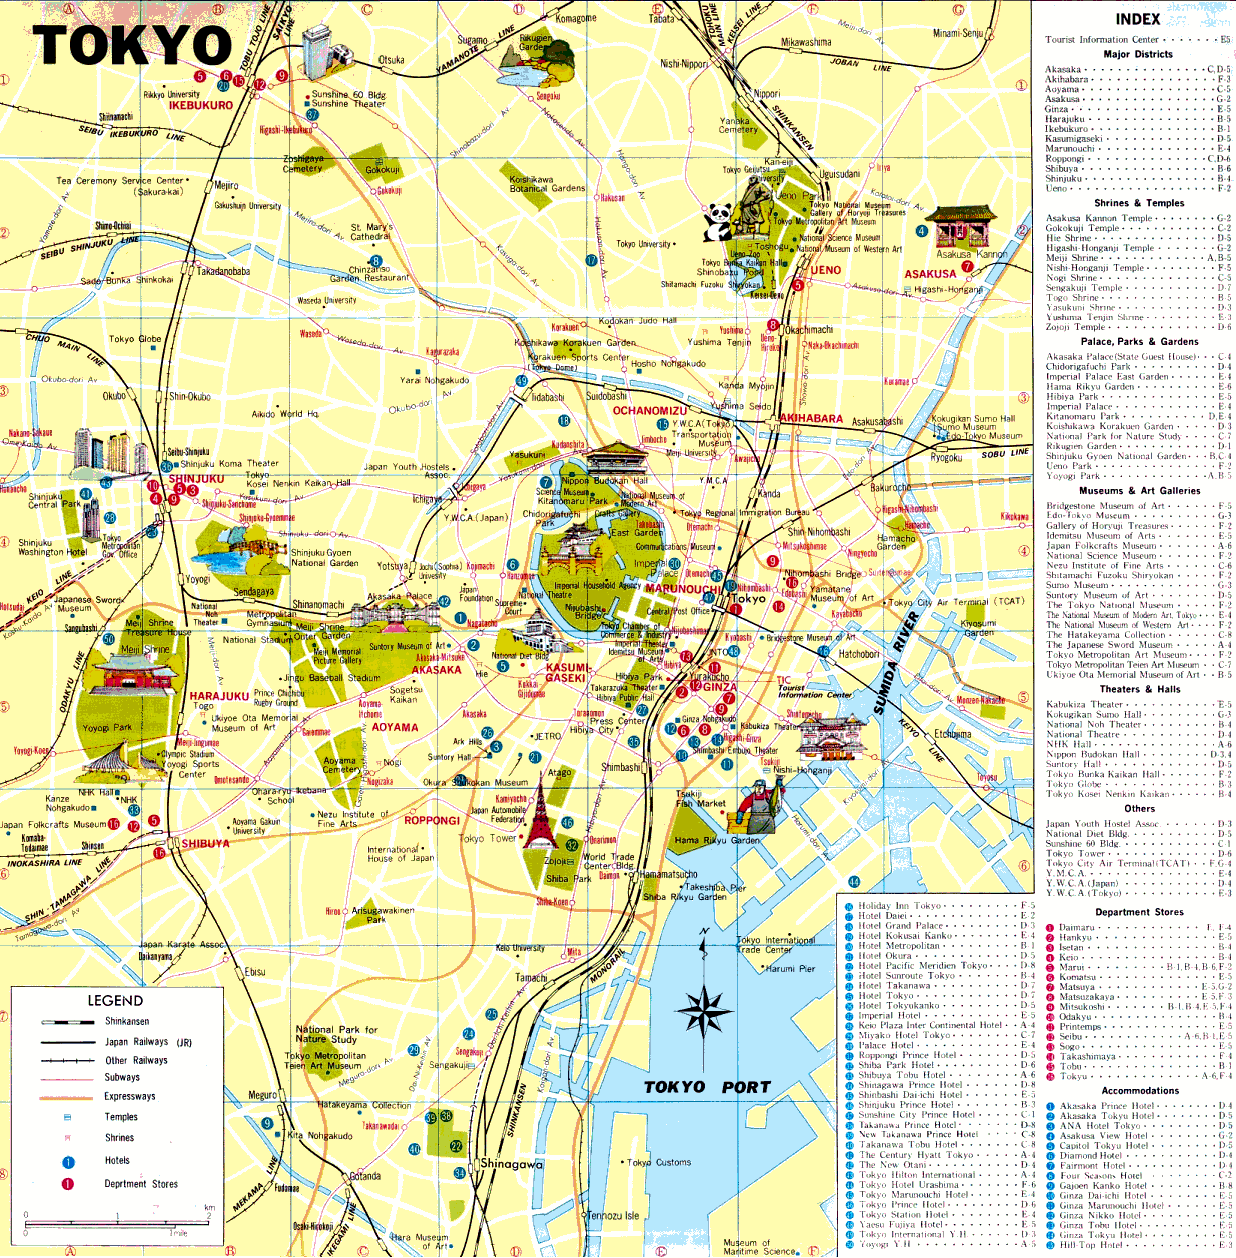 Tokyo travel guide - Wikitravel